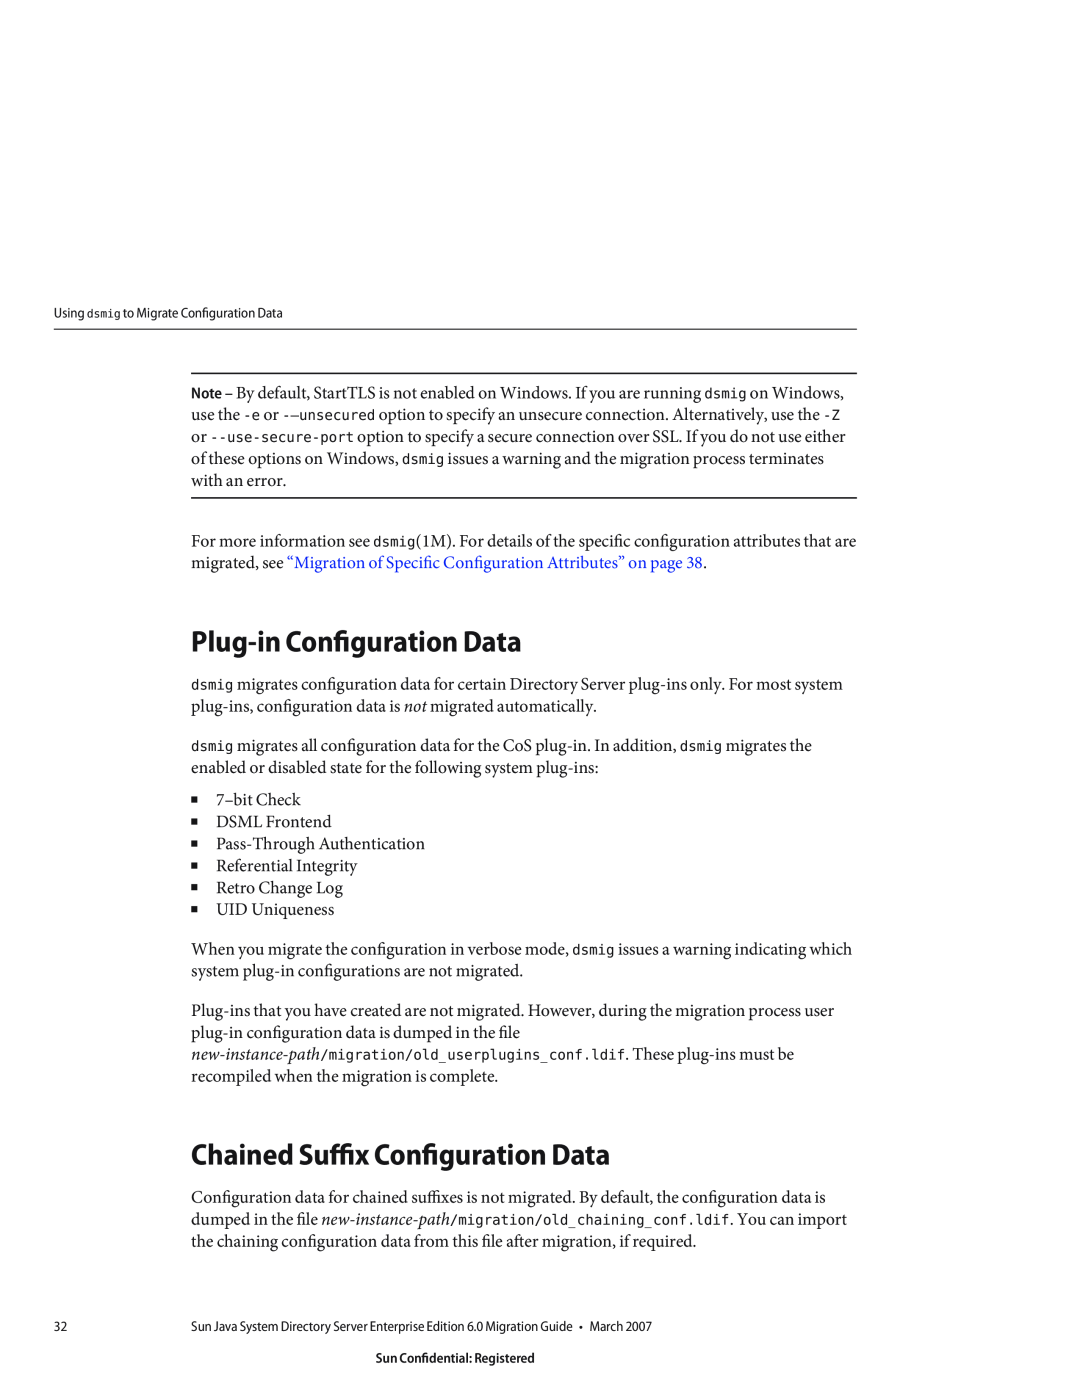 Sun Microsystems 8190994 manual Plug-in Configuration Data, Chained Suffix Configuration Data 